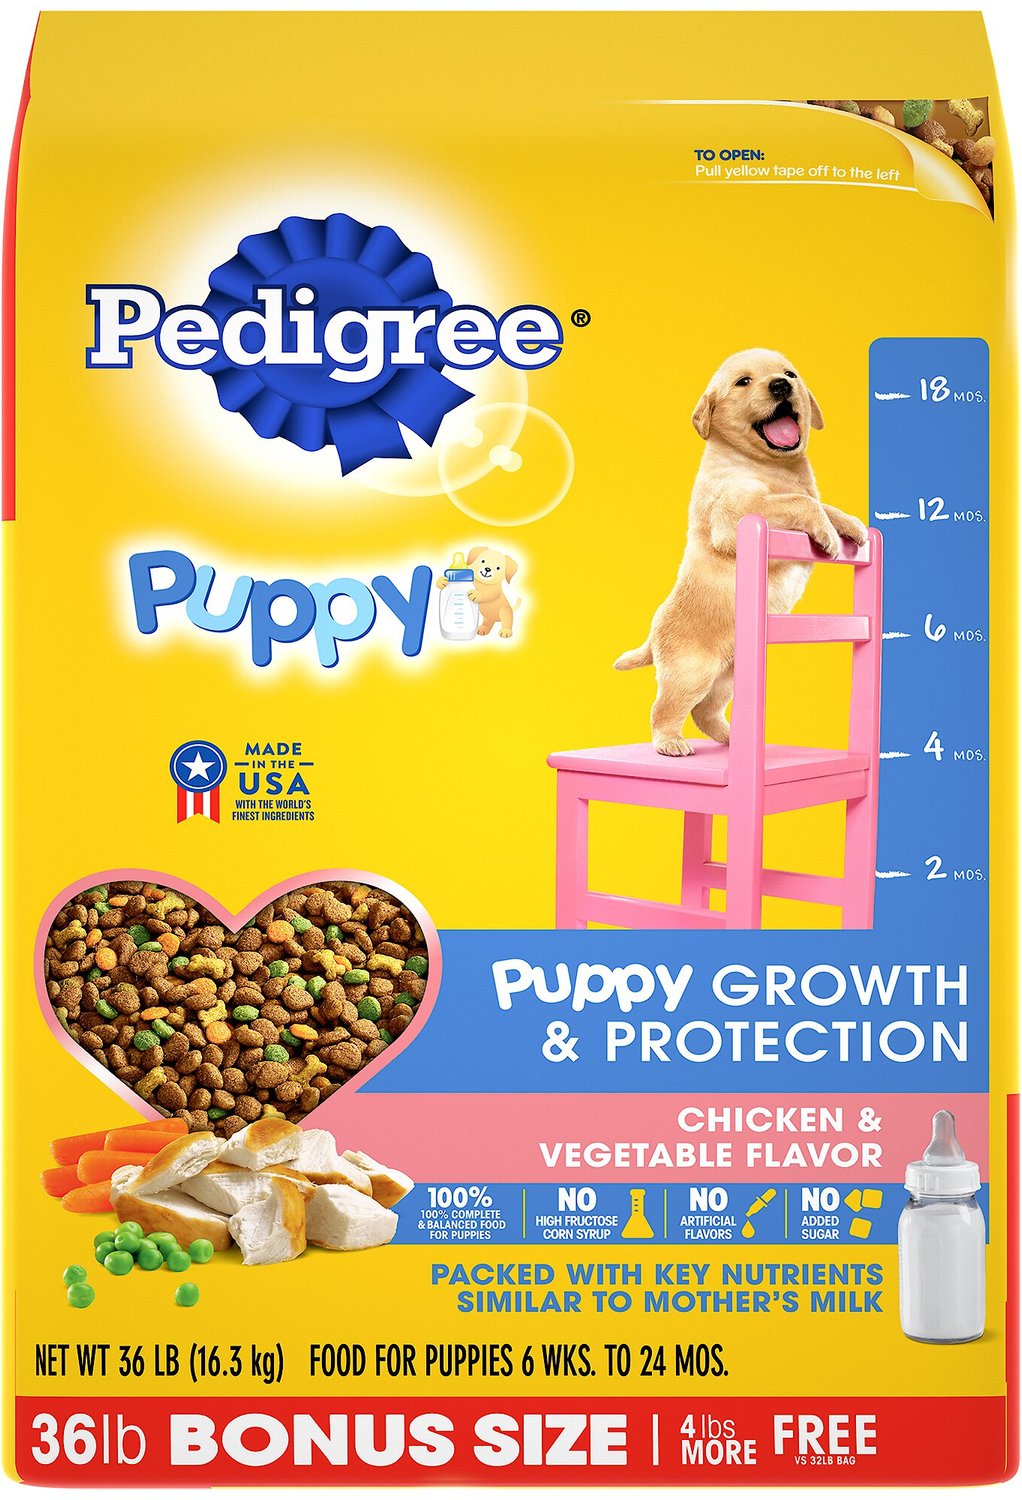 pedigree puppy serving size